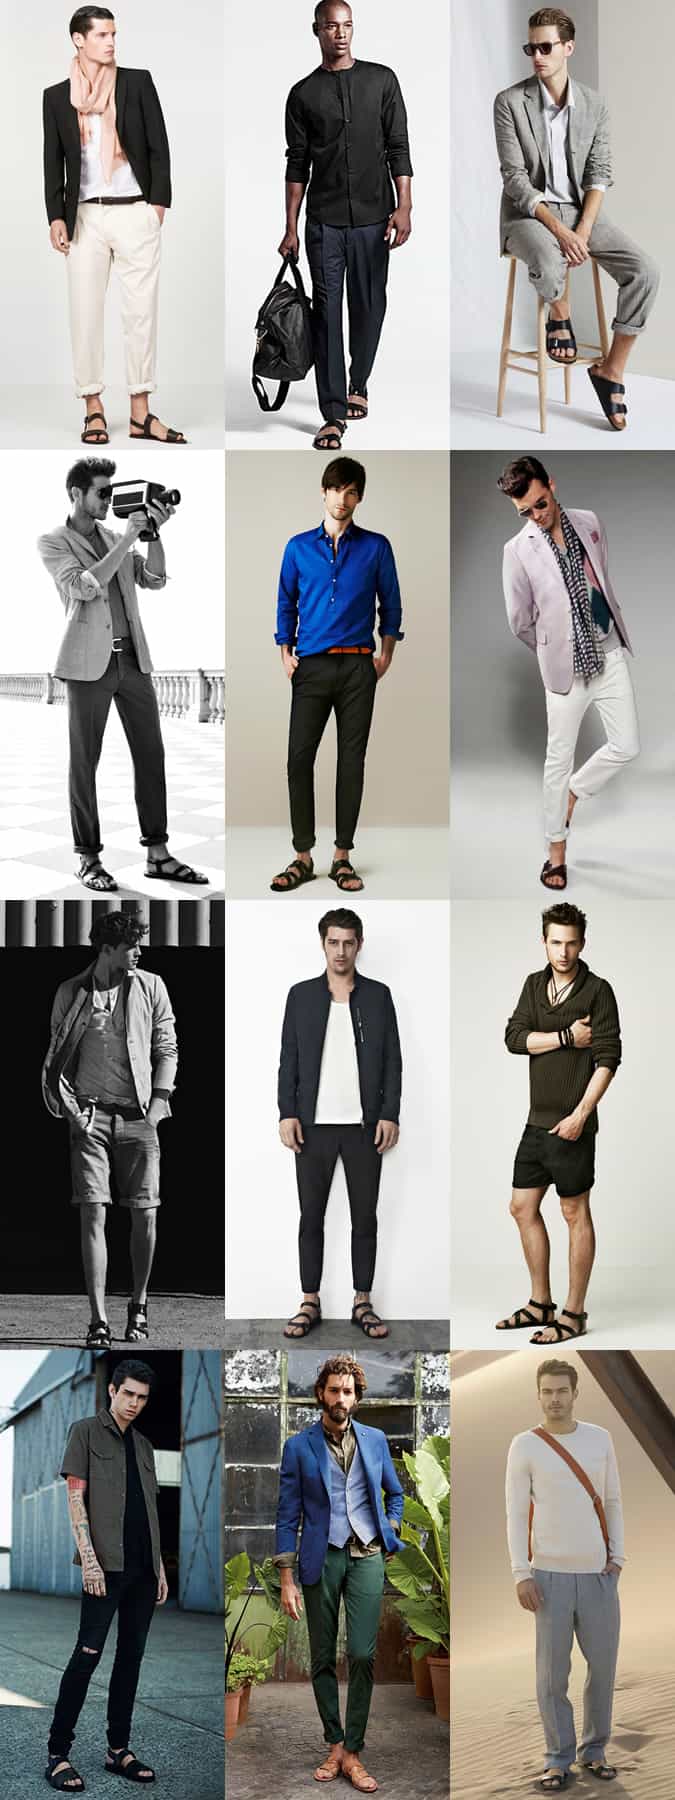 Men's Sandals - Bohemian Outfit Inspiration Lookbook